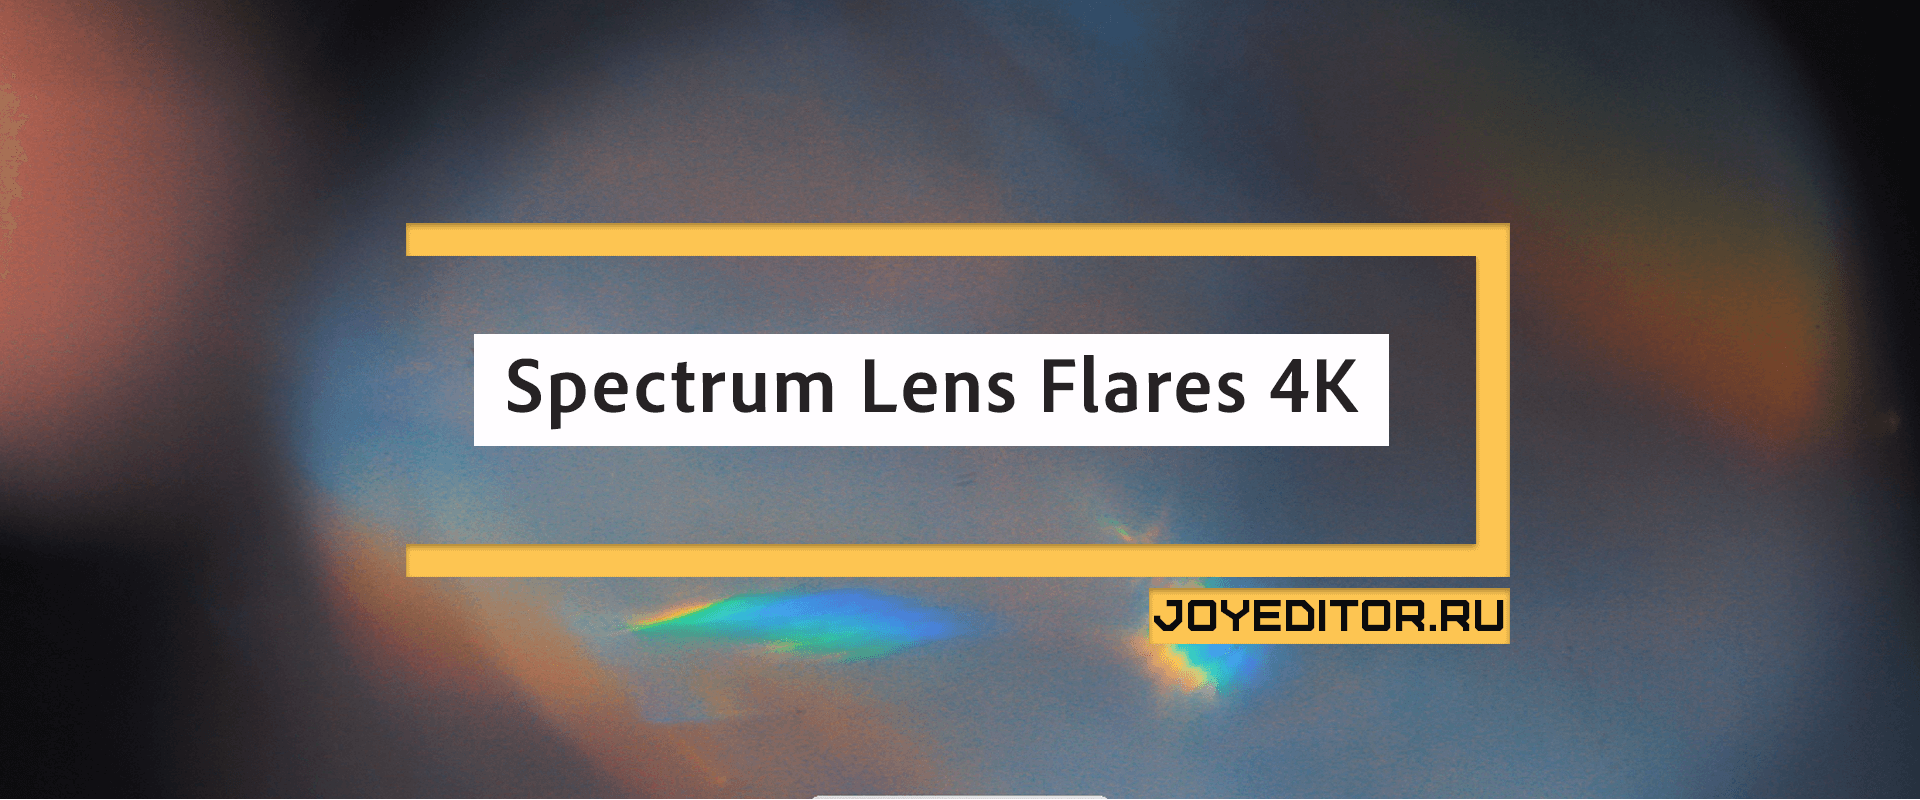 Spectrum Lens Flares 4K